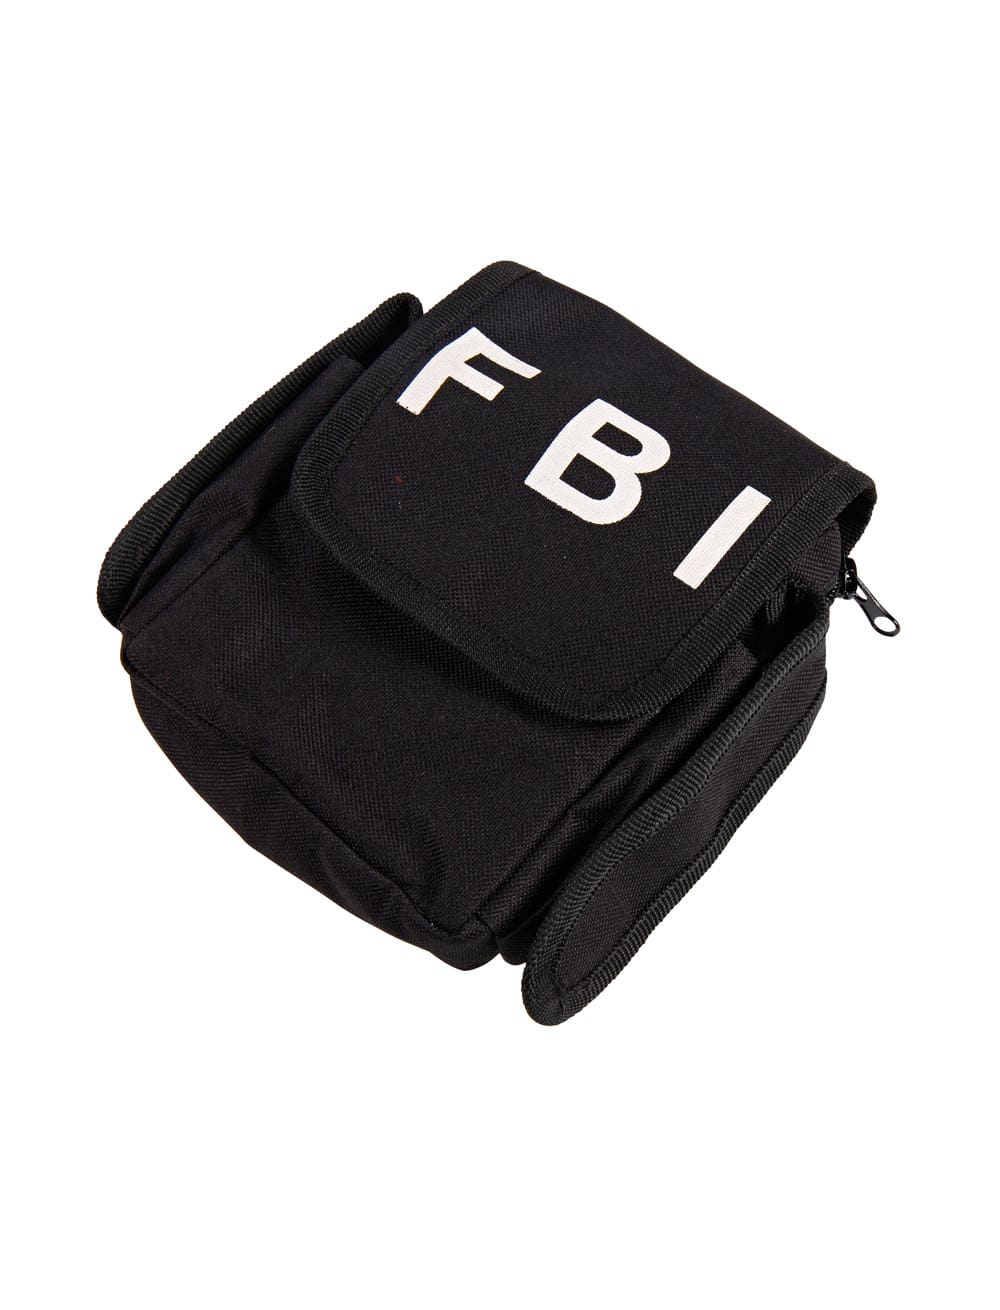 Gürteltasche FBI